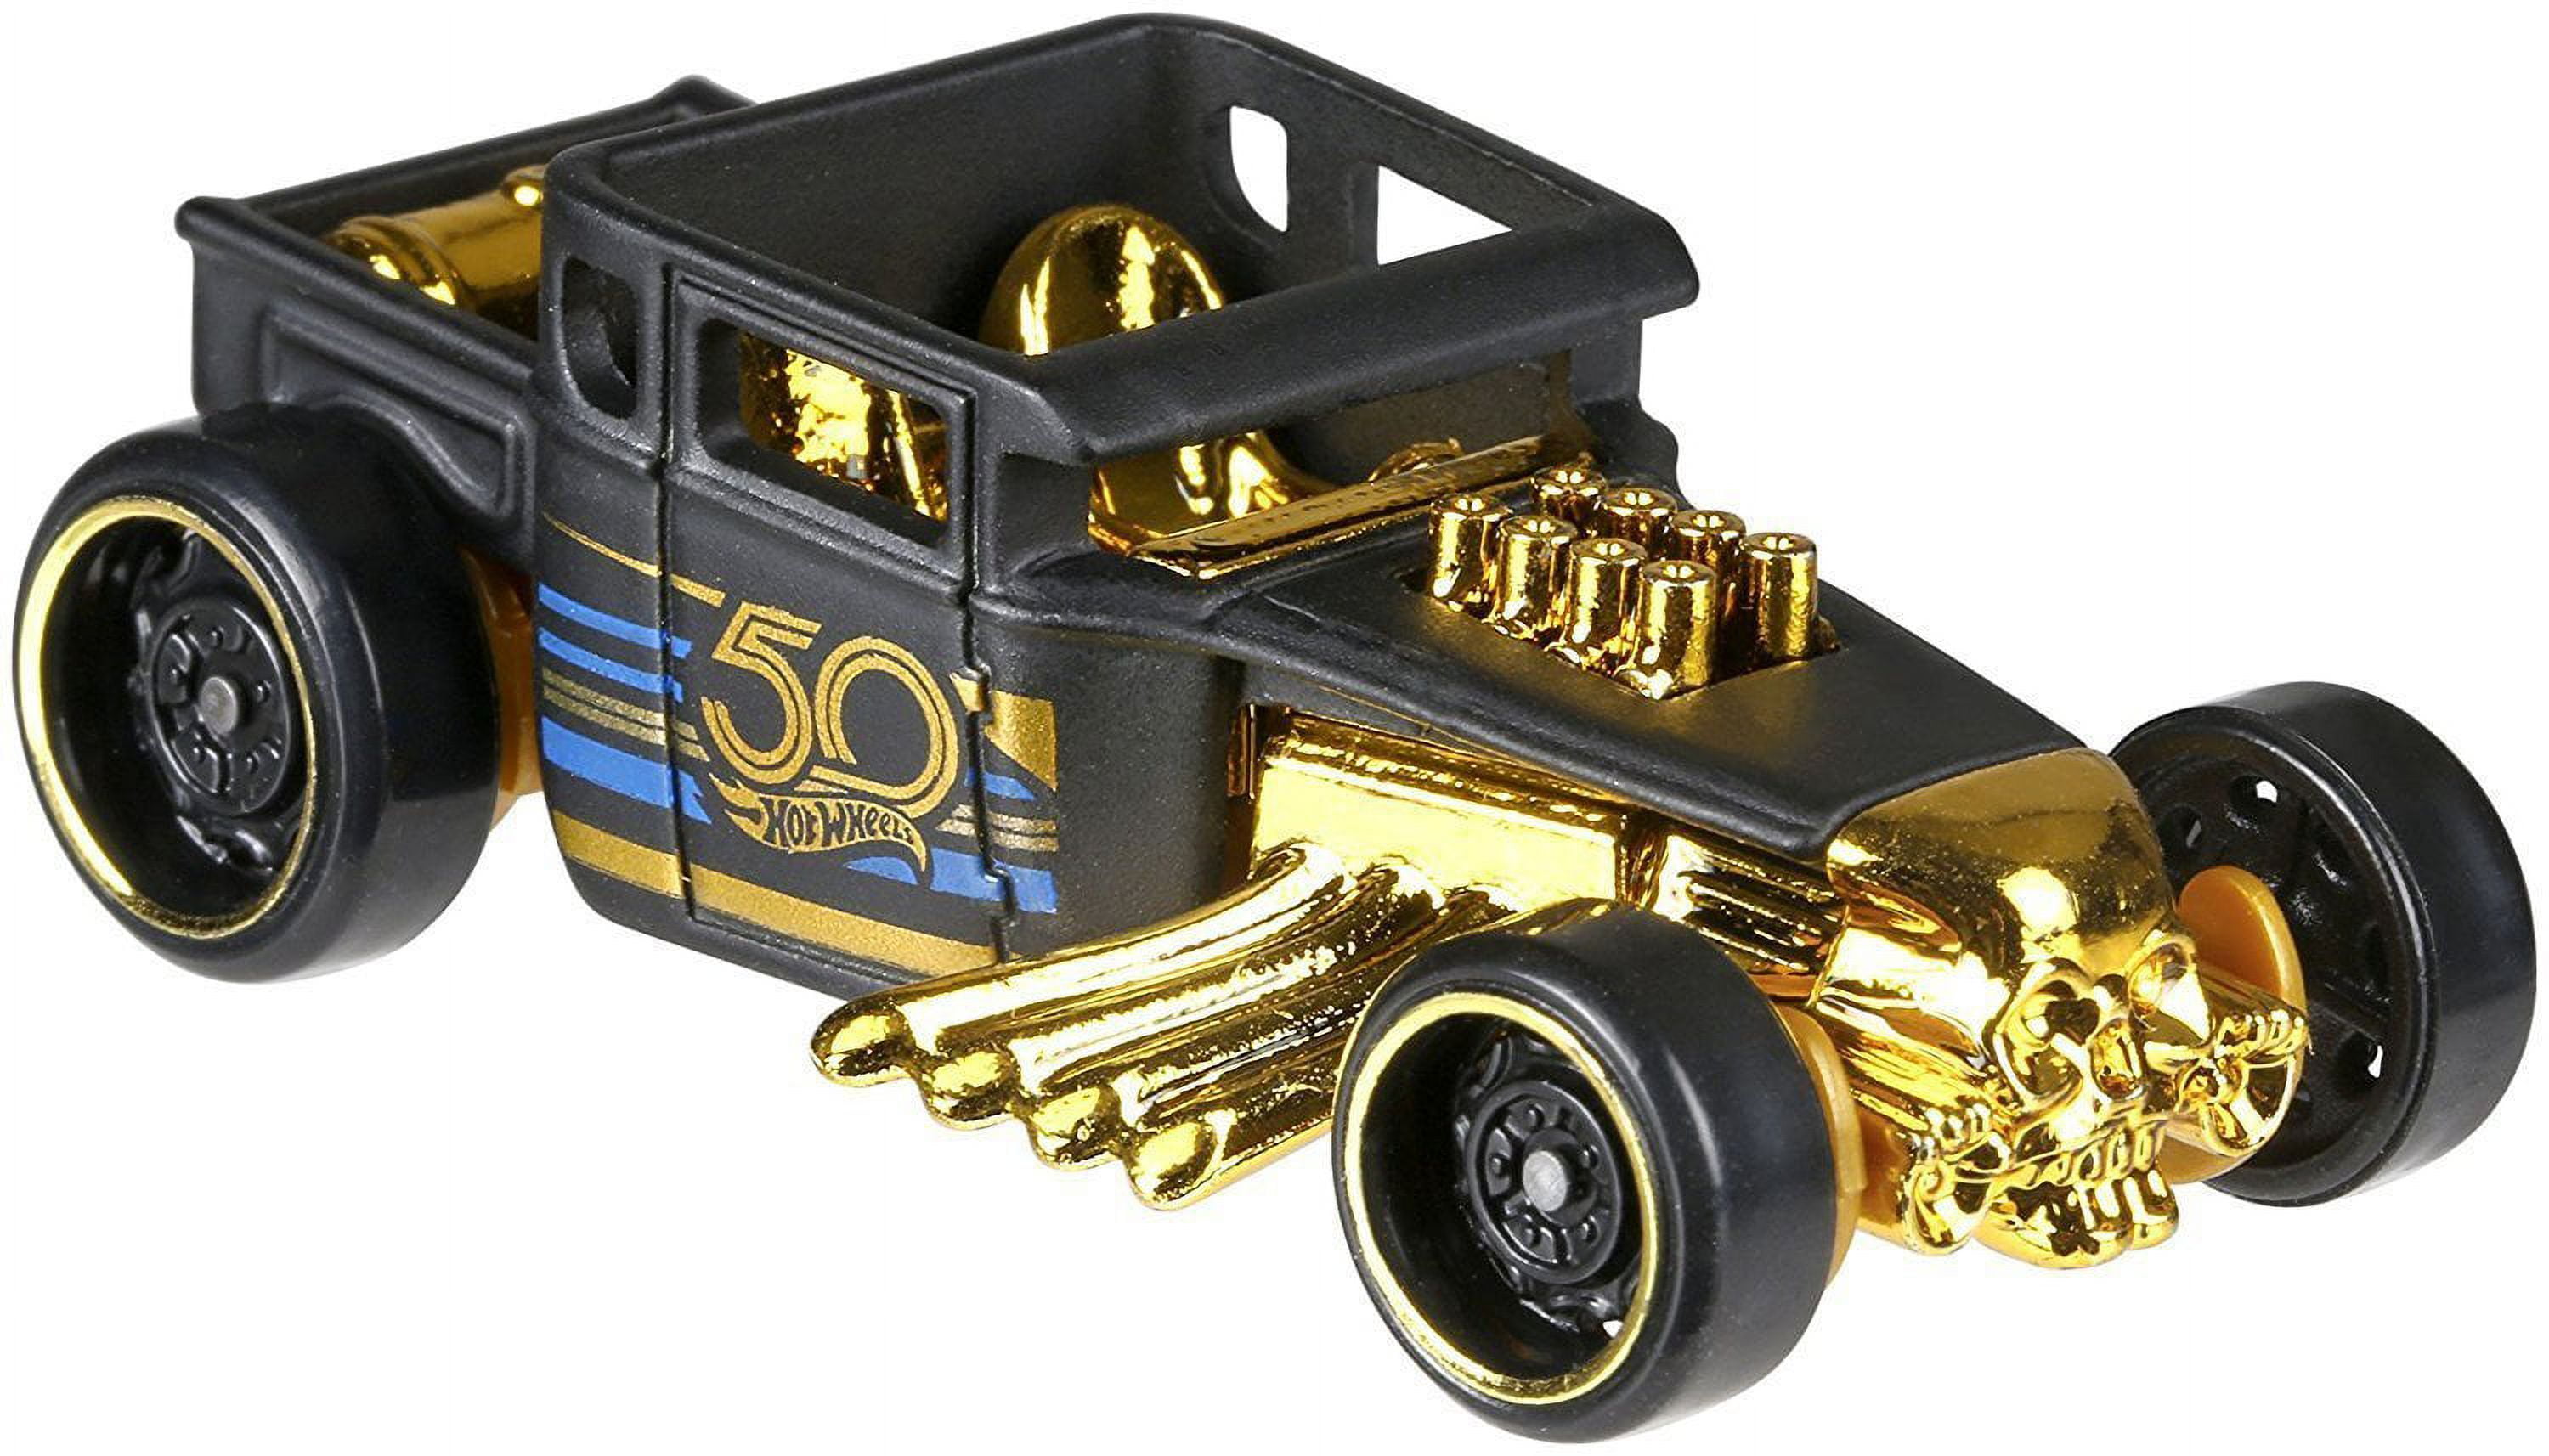 Bone shaker. Машинка hot Wheels Bone Shaker. Hot Wheels 50th Anniversary Black Gold. Hot Wheels 50th Black Gold. Машинка hot Wheels Bone Shaker Gold коллекционная.